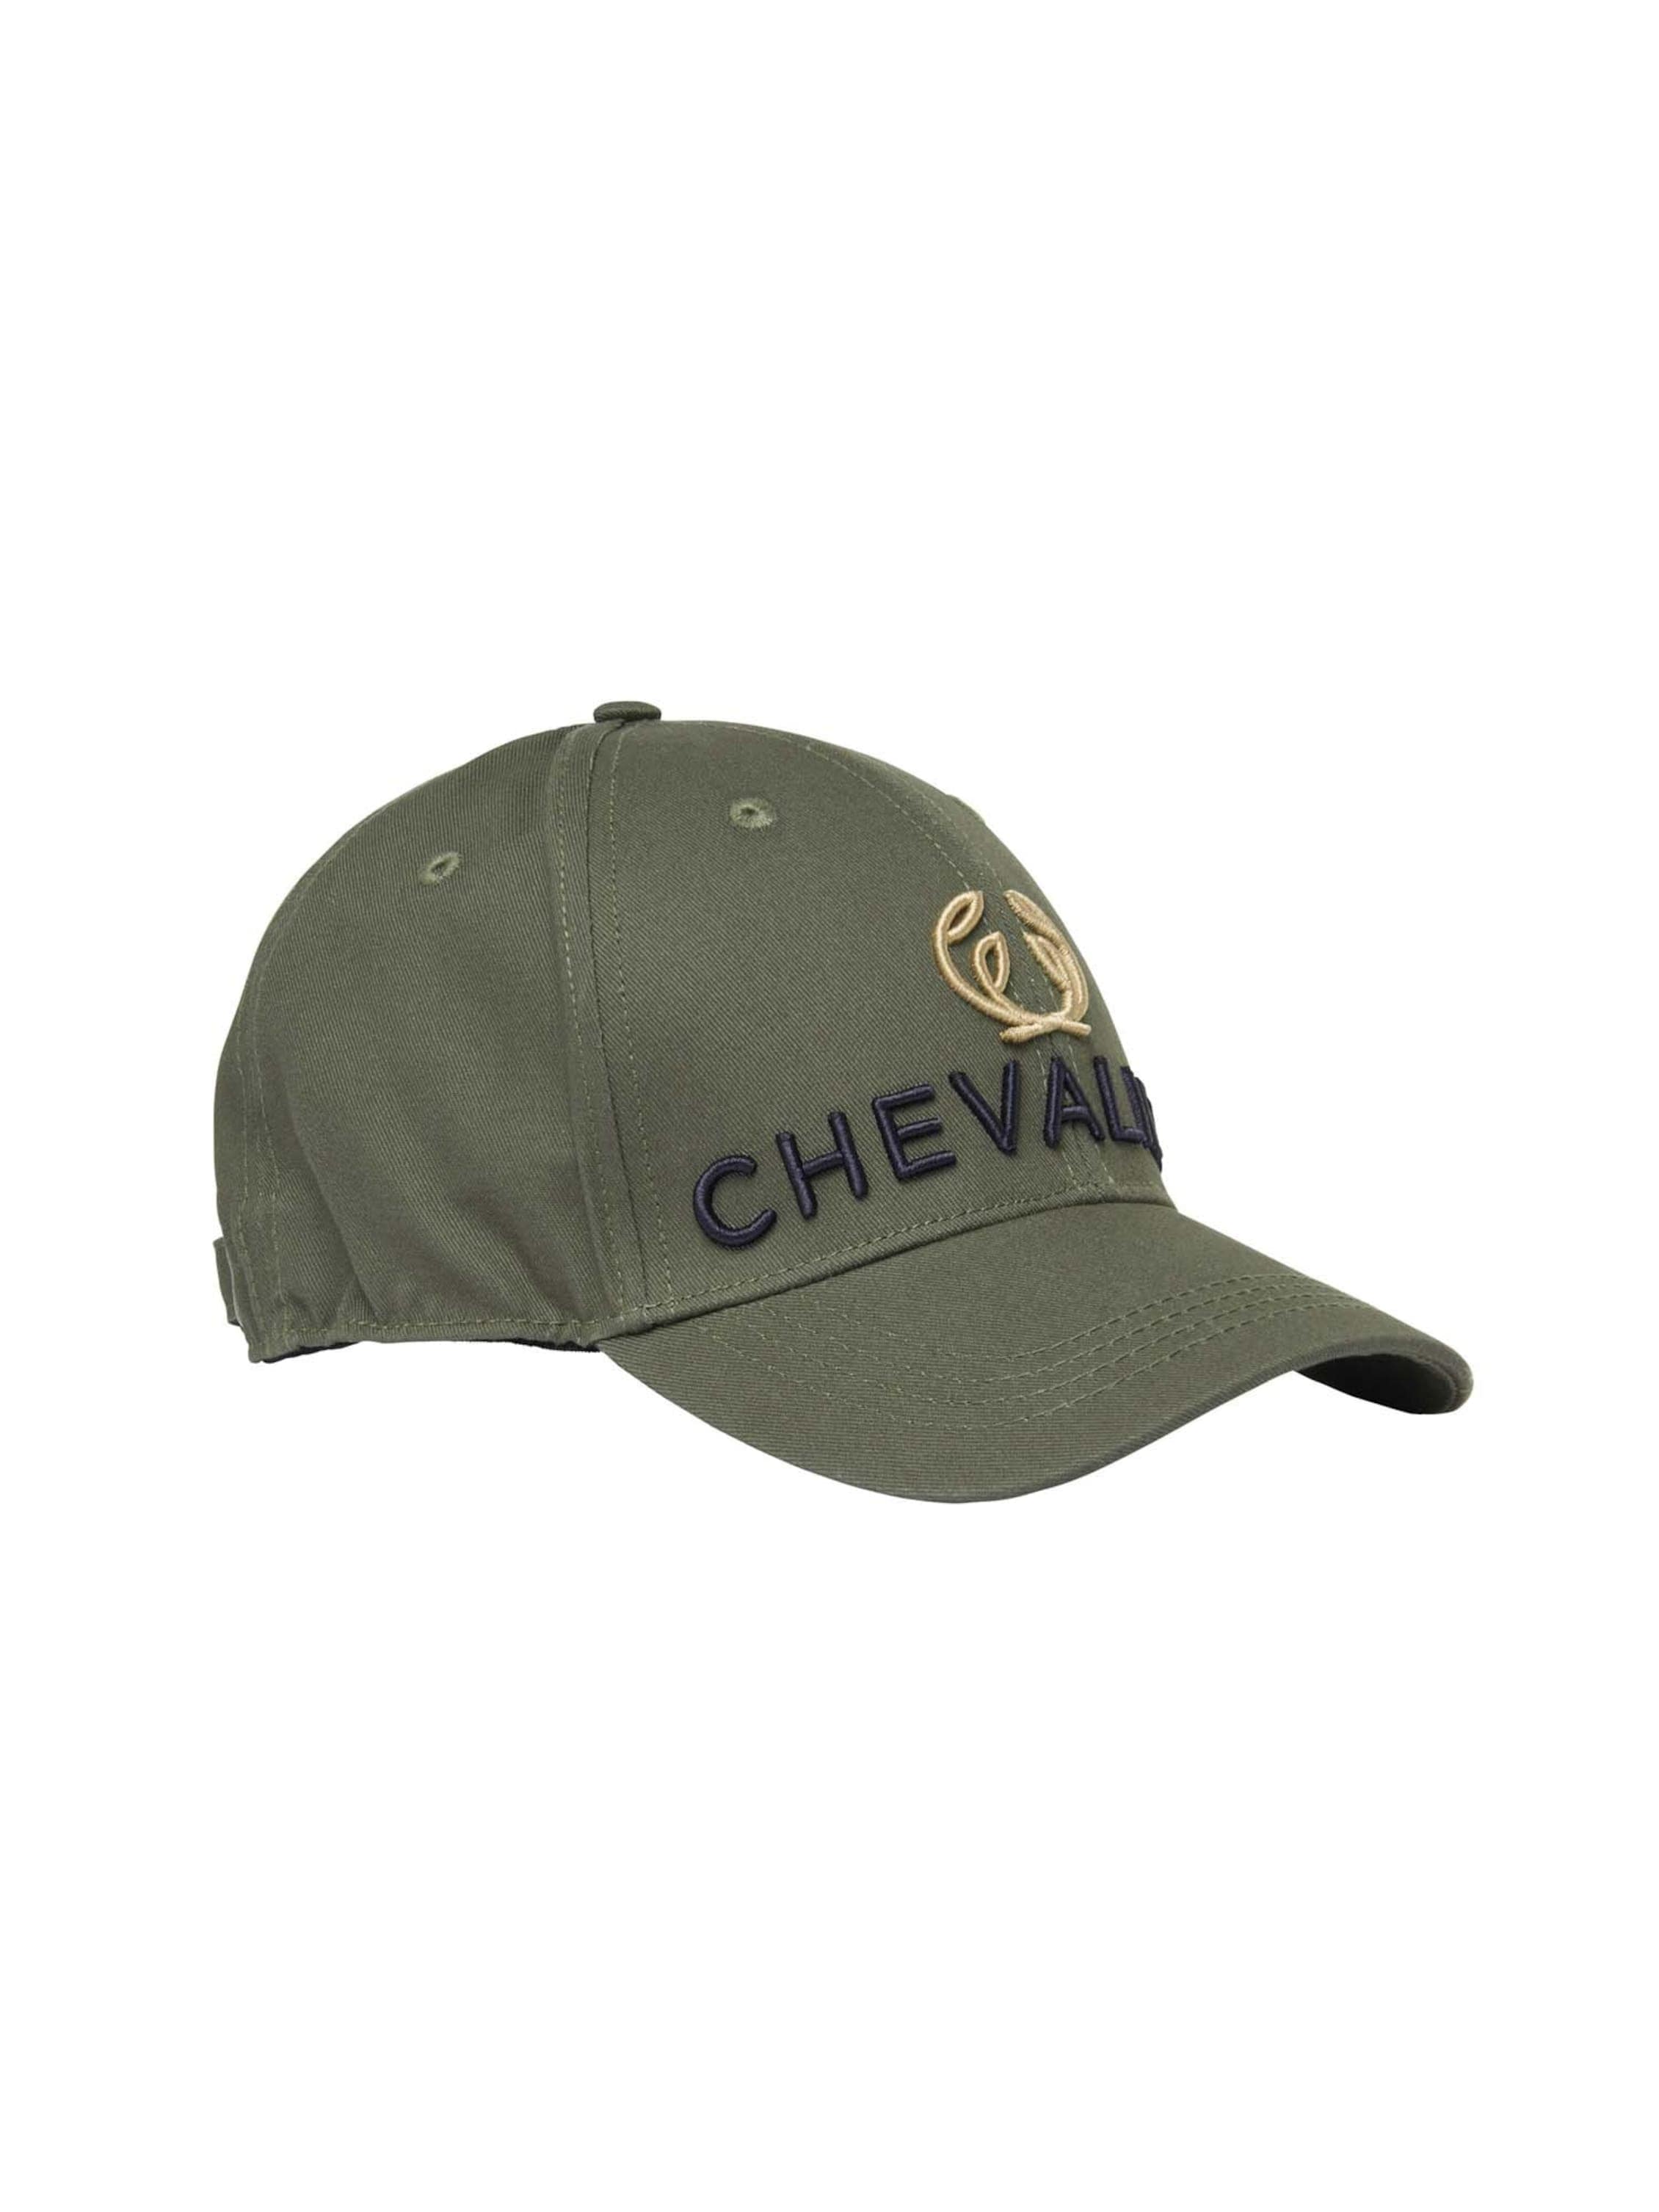 Chevalier Elm Logo Caps